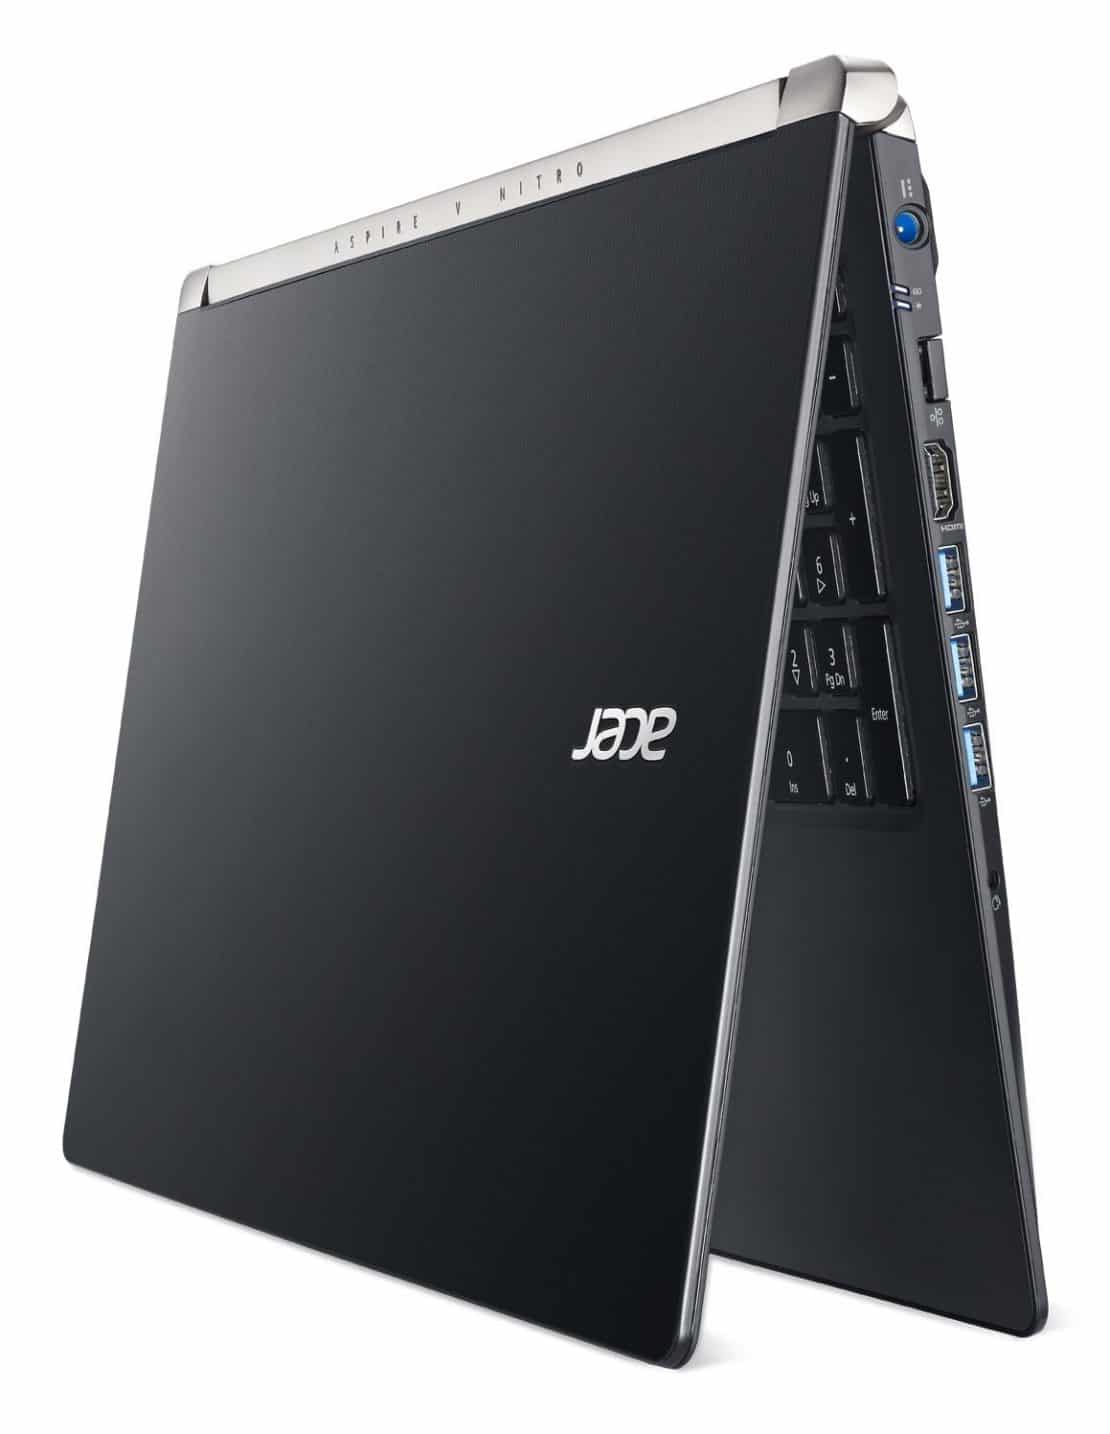 Acer Aspire V 15 Nitro - Best Gaming Laptop Under 1000 - Affordable Gaming Laptop For Less Than $1000